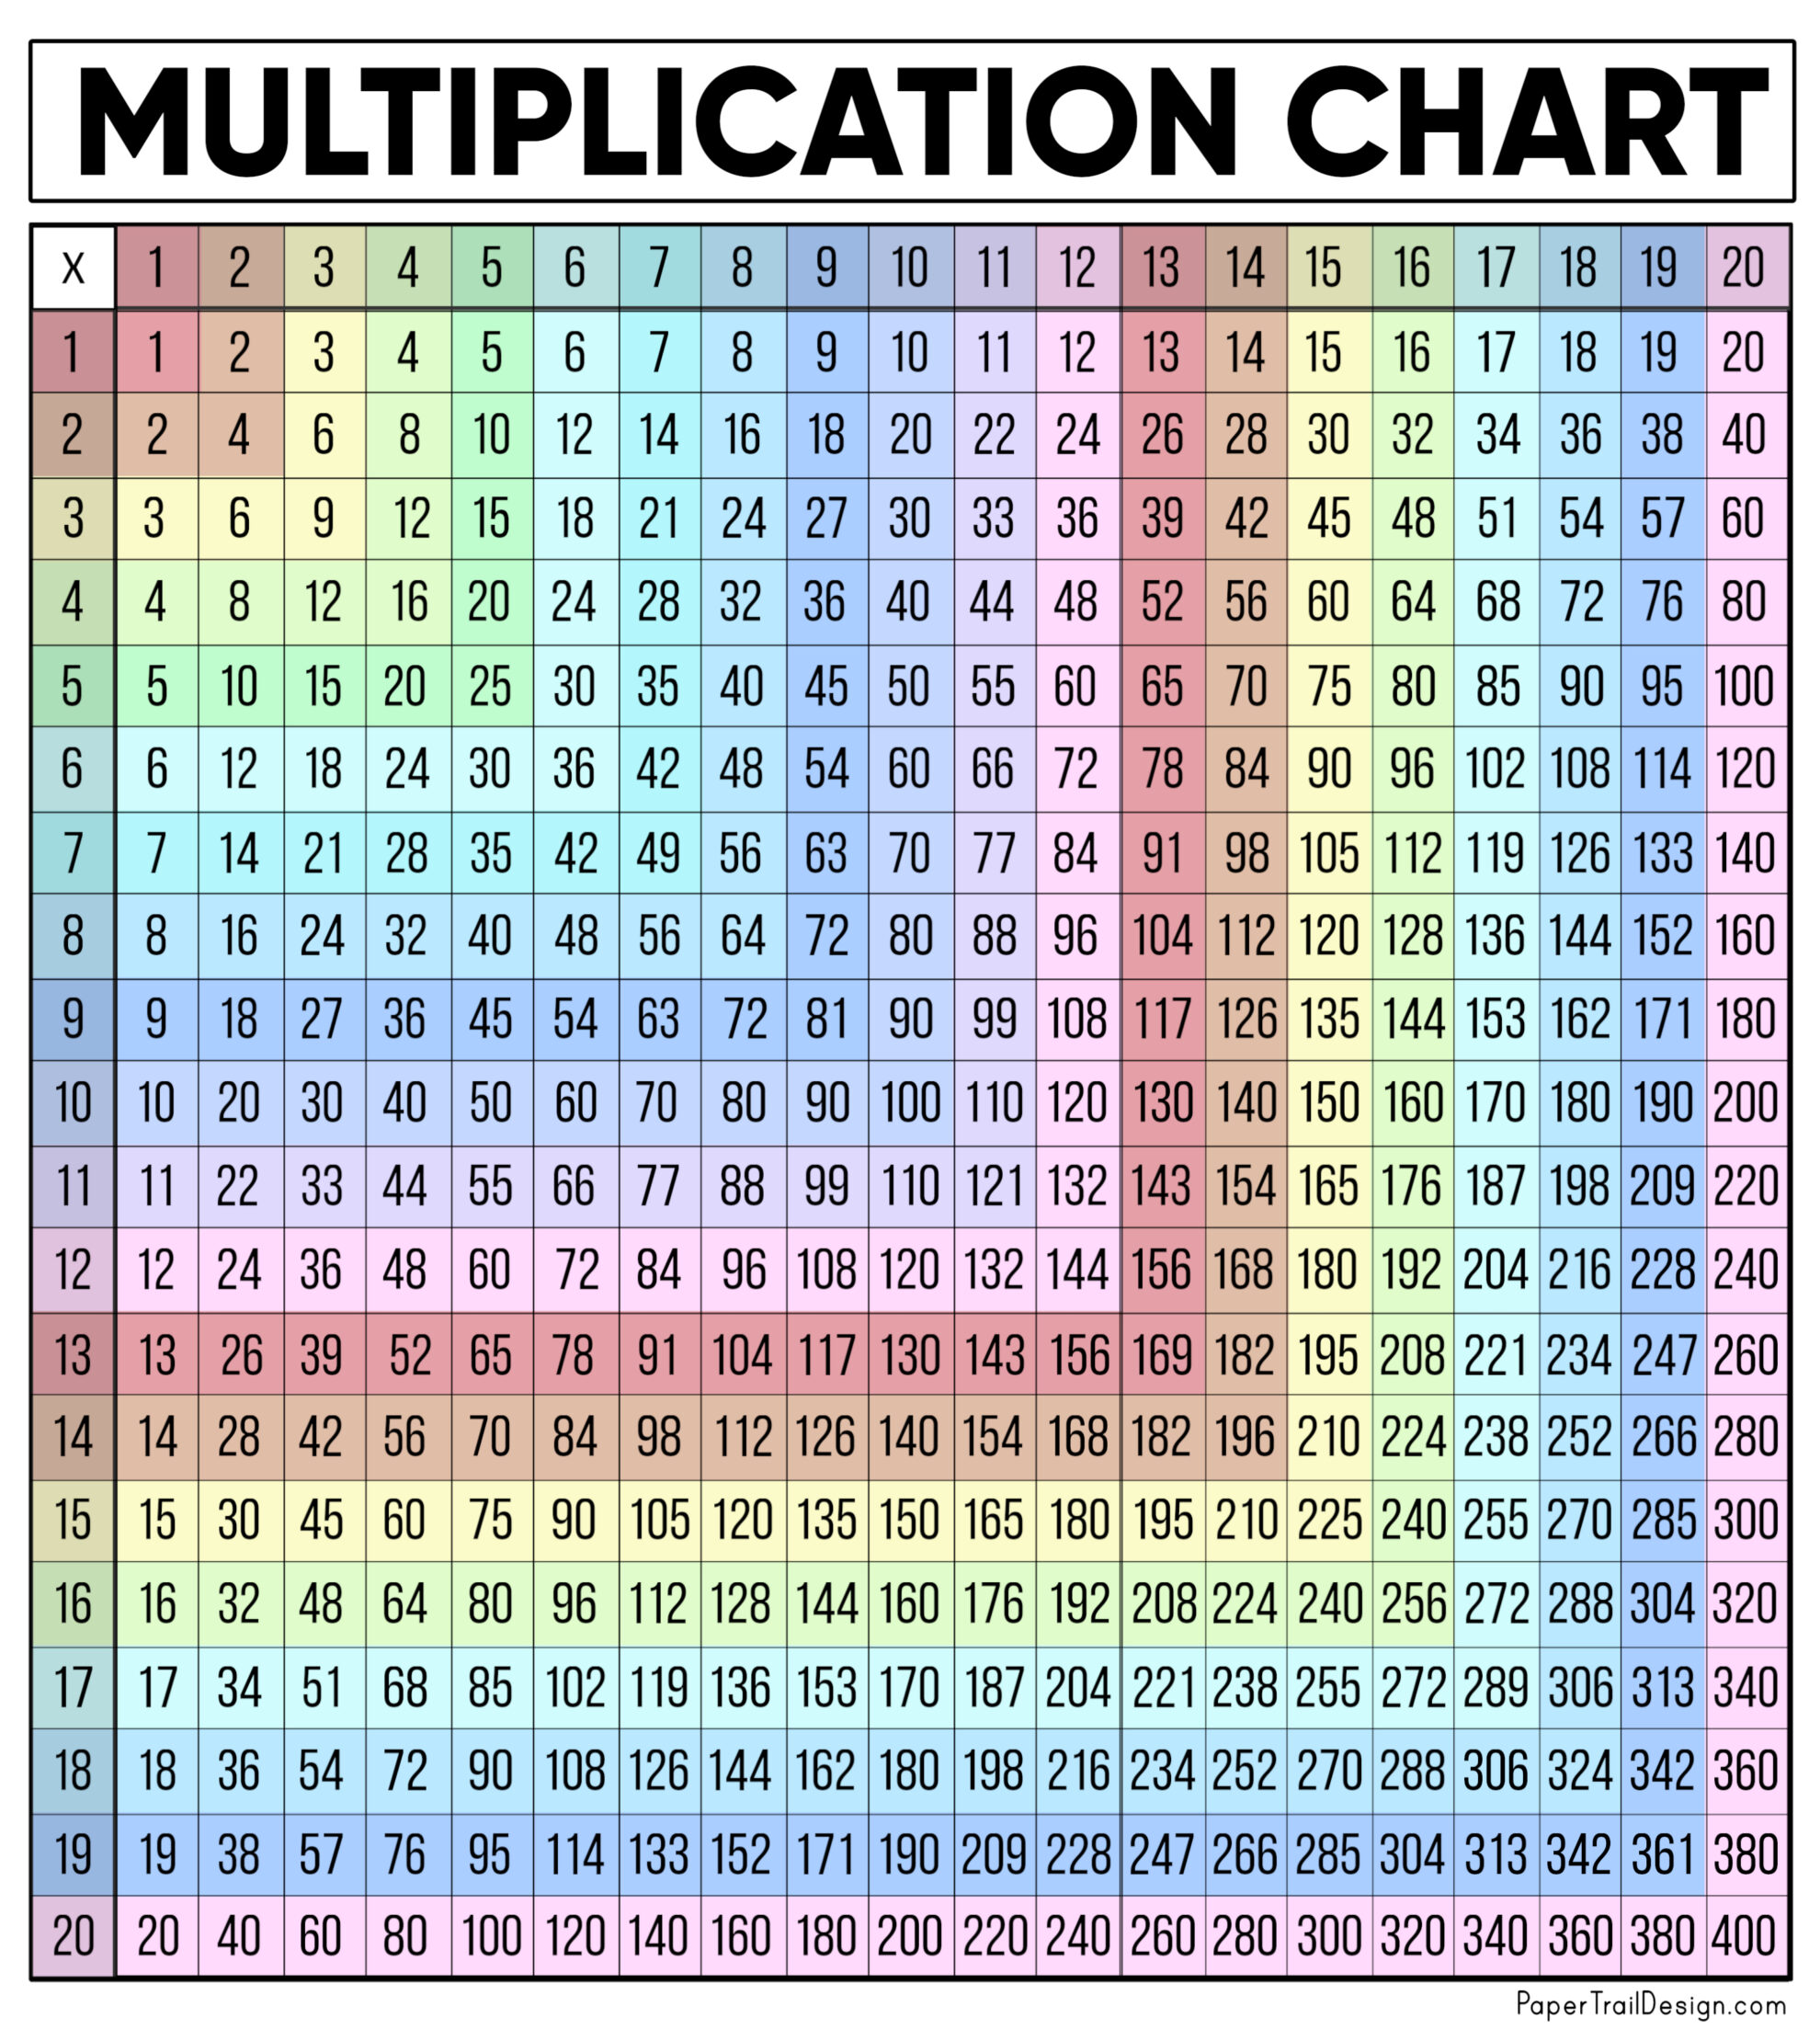 multiplication-table-chart-printable-bromasop